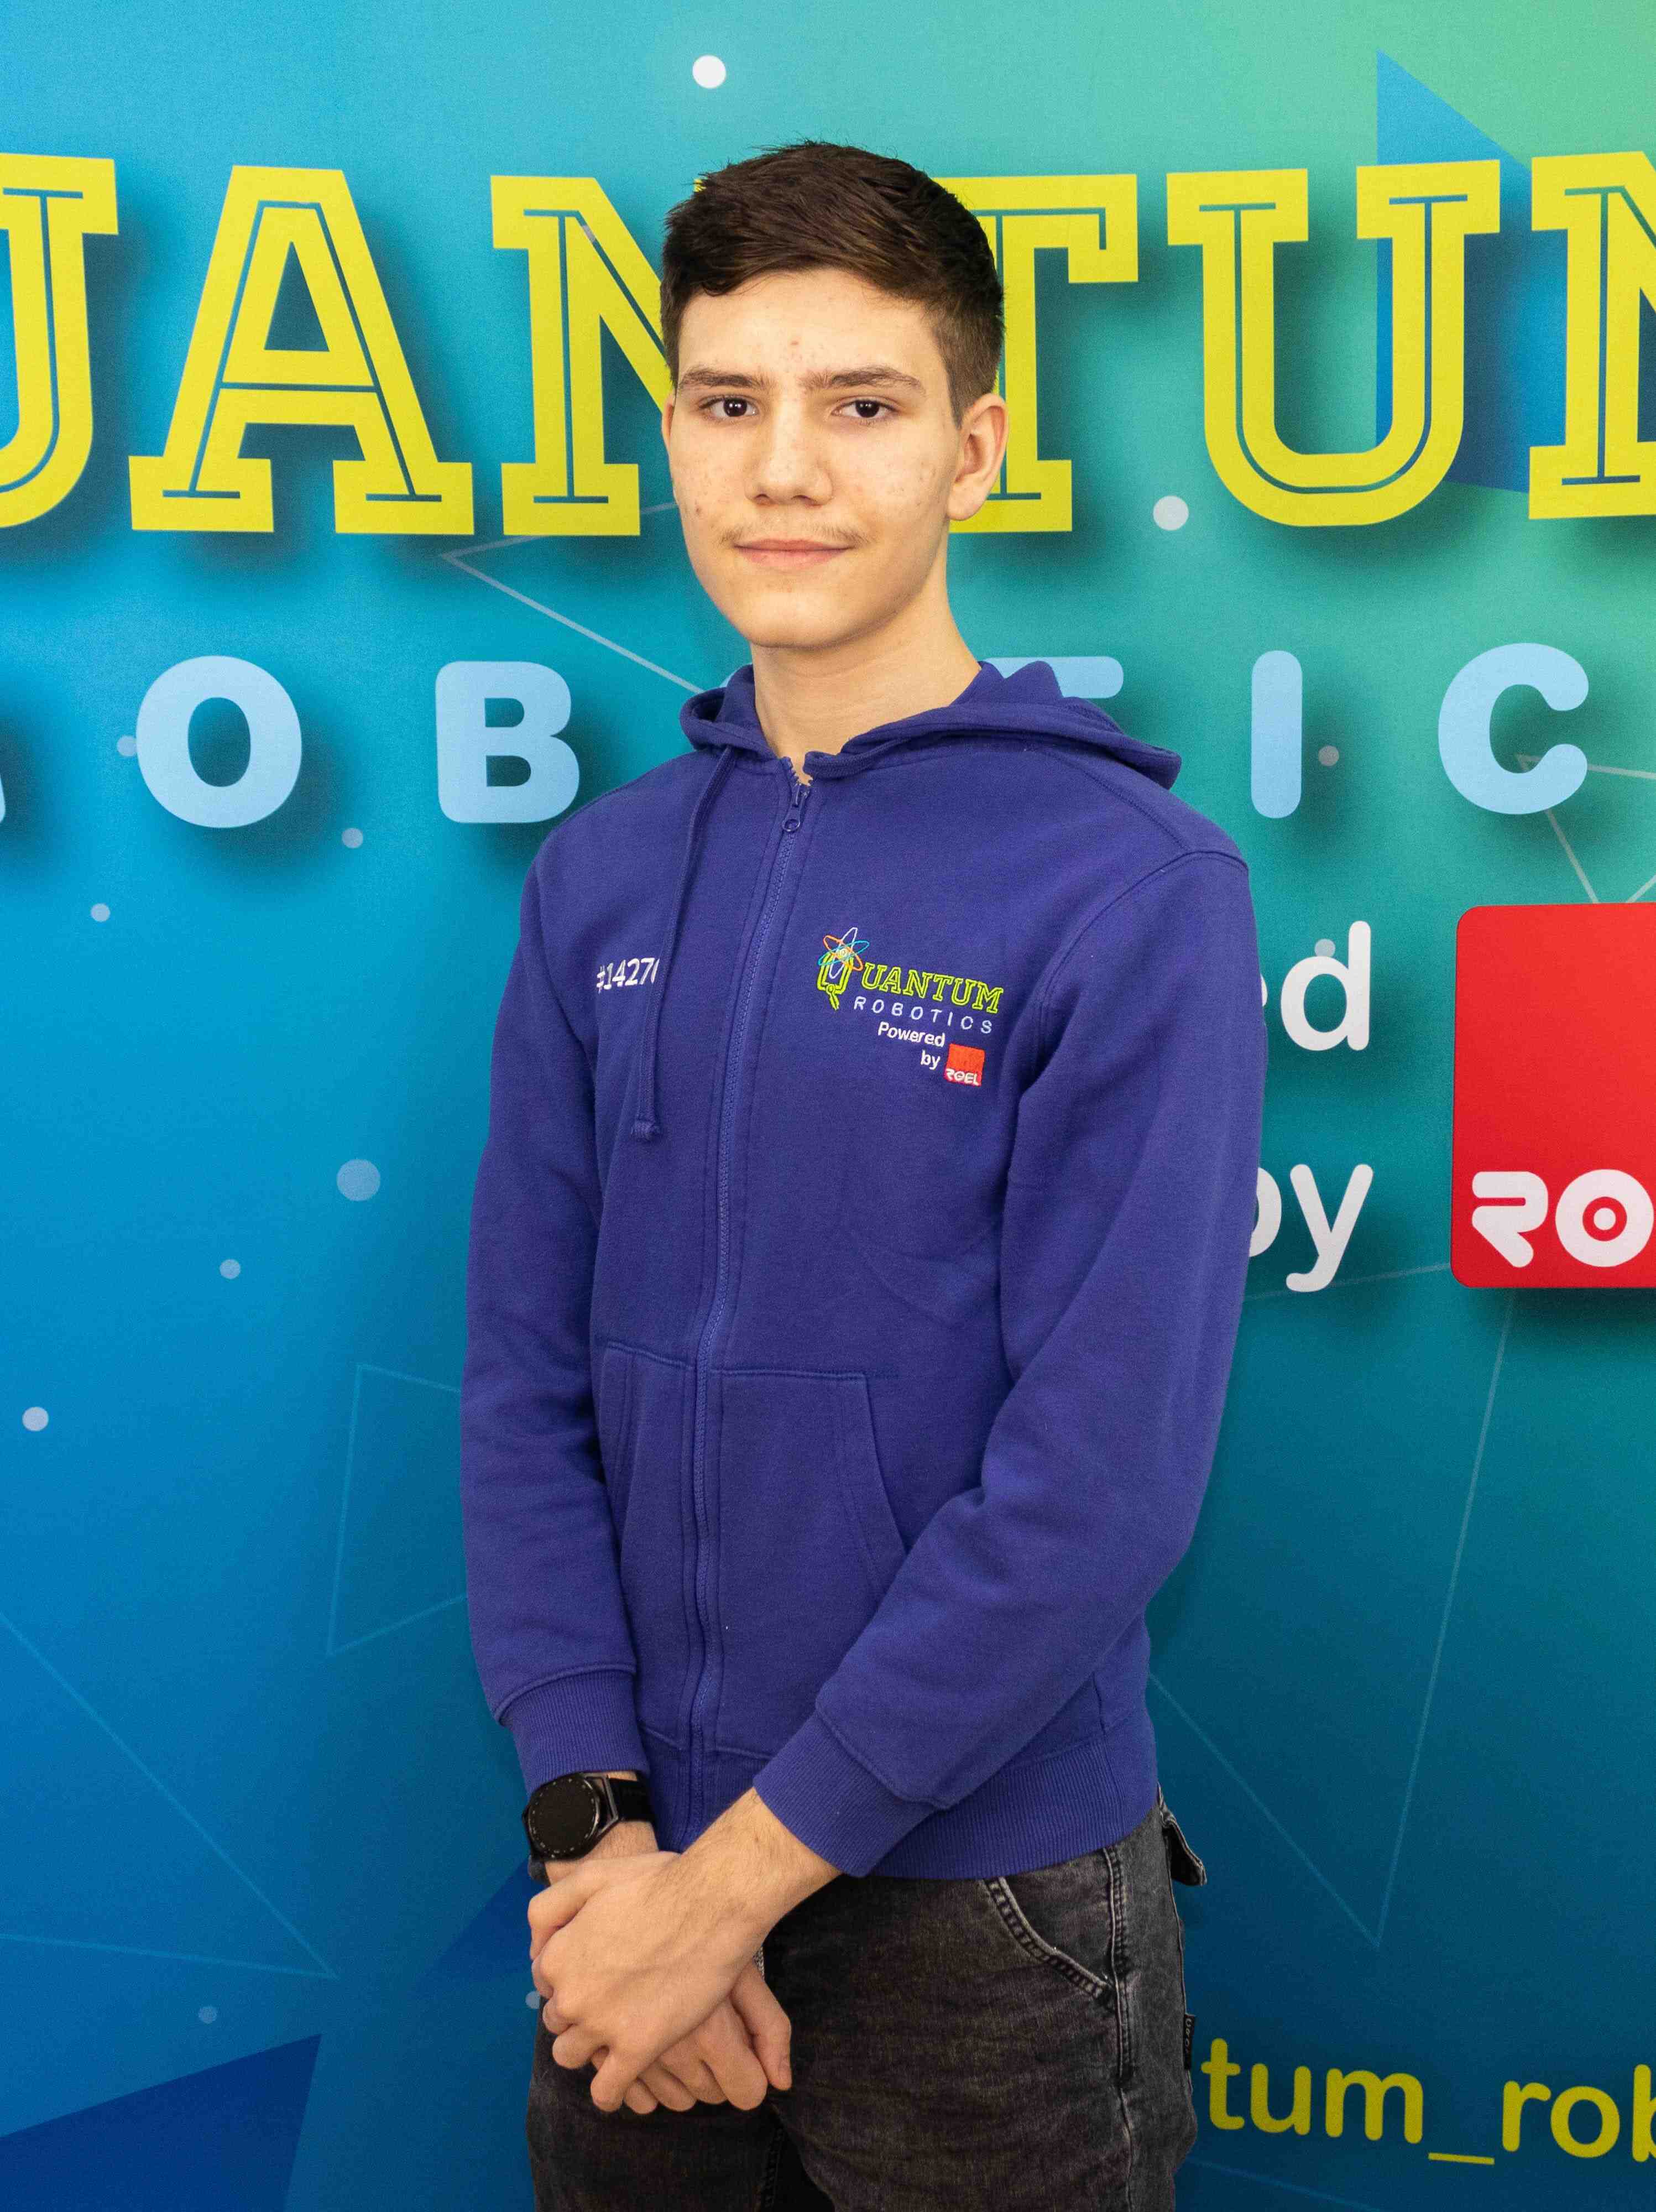 Quantum-Robotics-FTC-FIRST-competiton-team-members-Theodor-Ciobanu